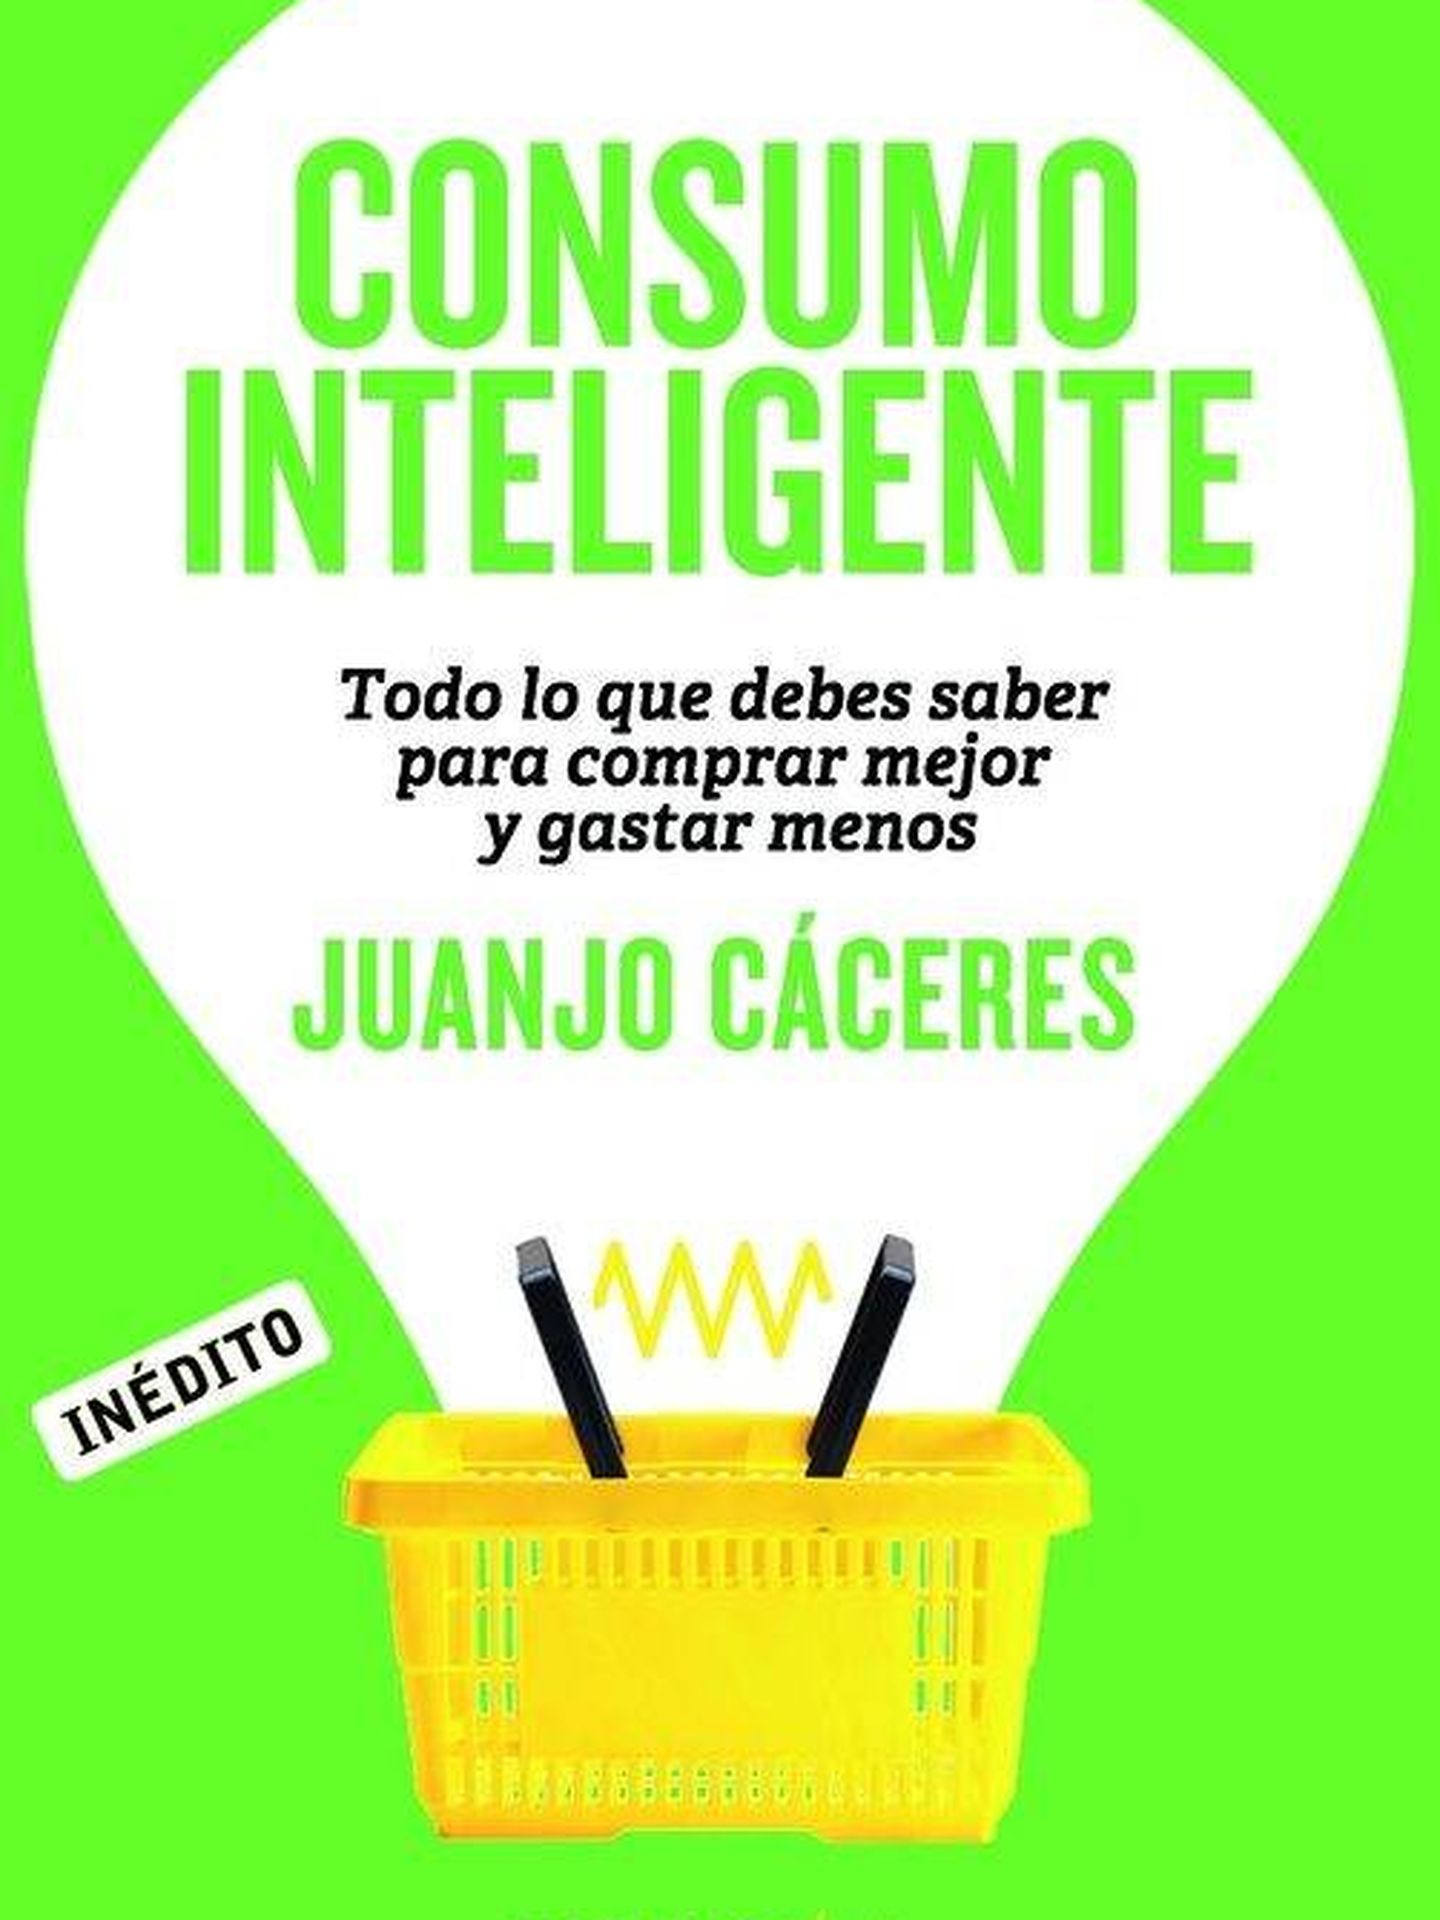 El libro de Juanjo Cáceres.